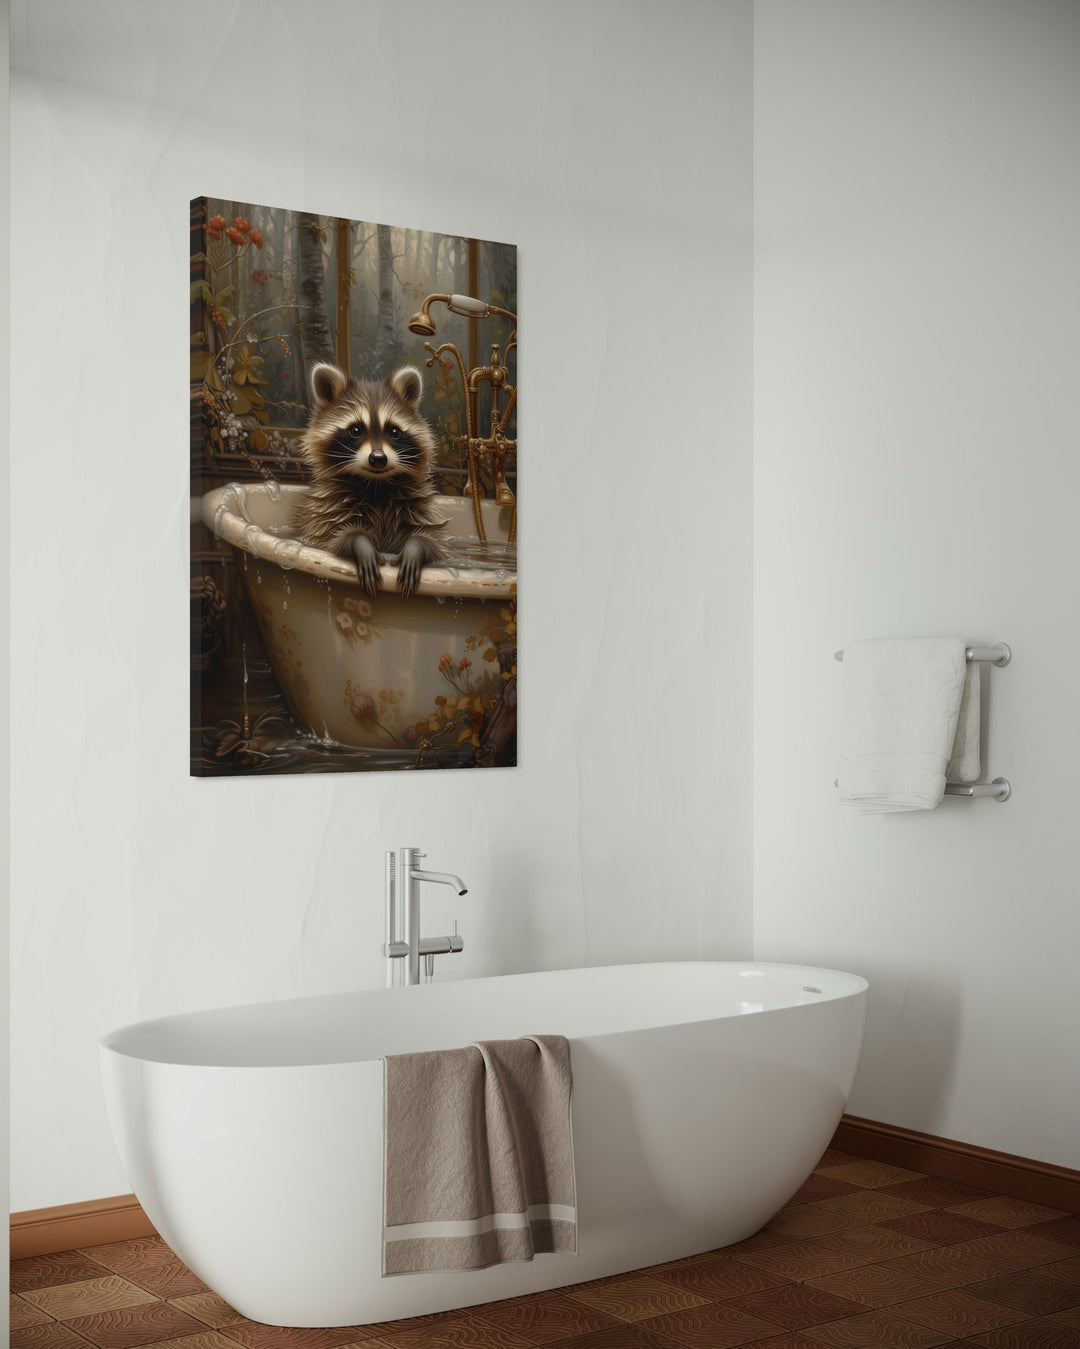 Raccoon In The Bathtub Framed Canvas Wall Art in white bathroom